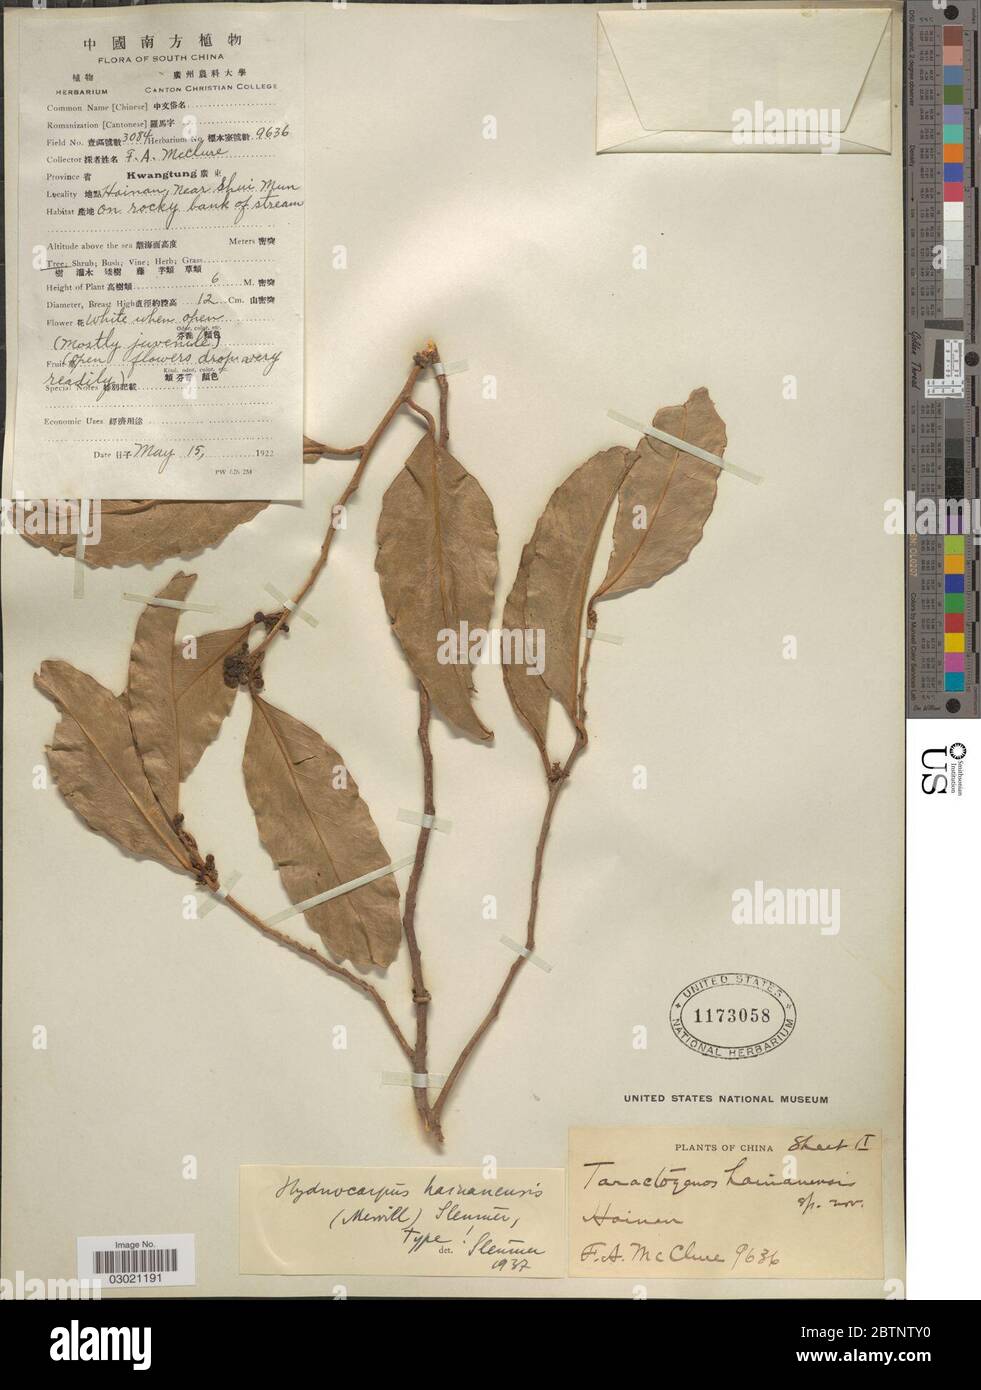 Hydnocarpus hainanensis Merr Sleumer. Stock Photo